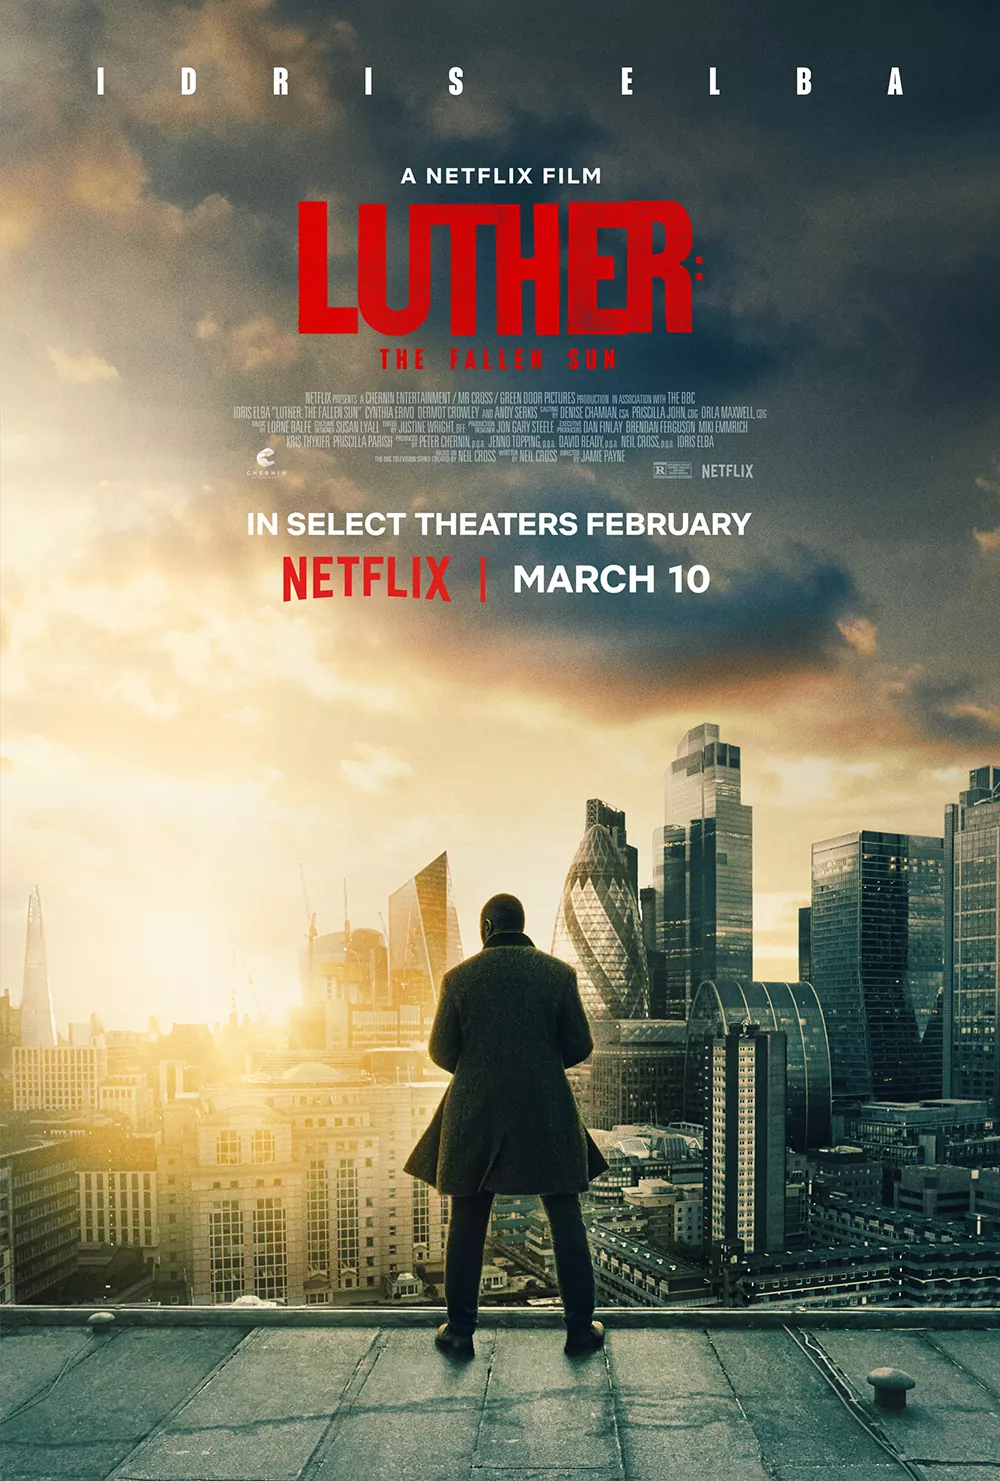 Trailer Από Το "Luther: The Fallen Sun"